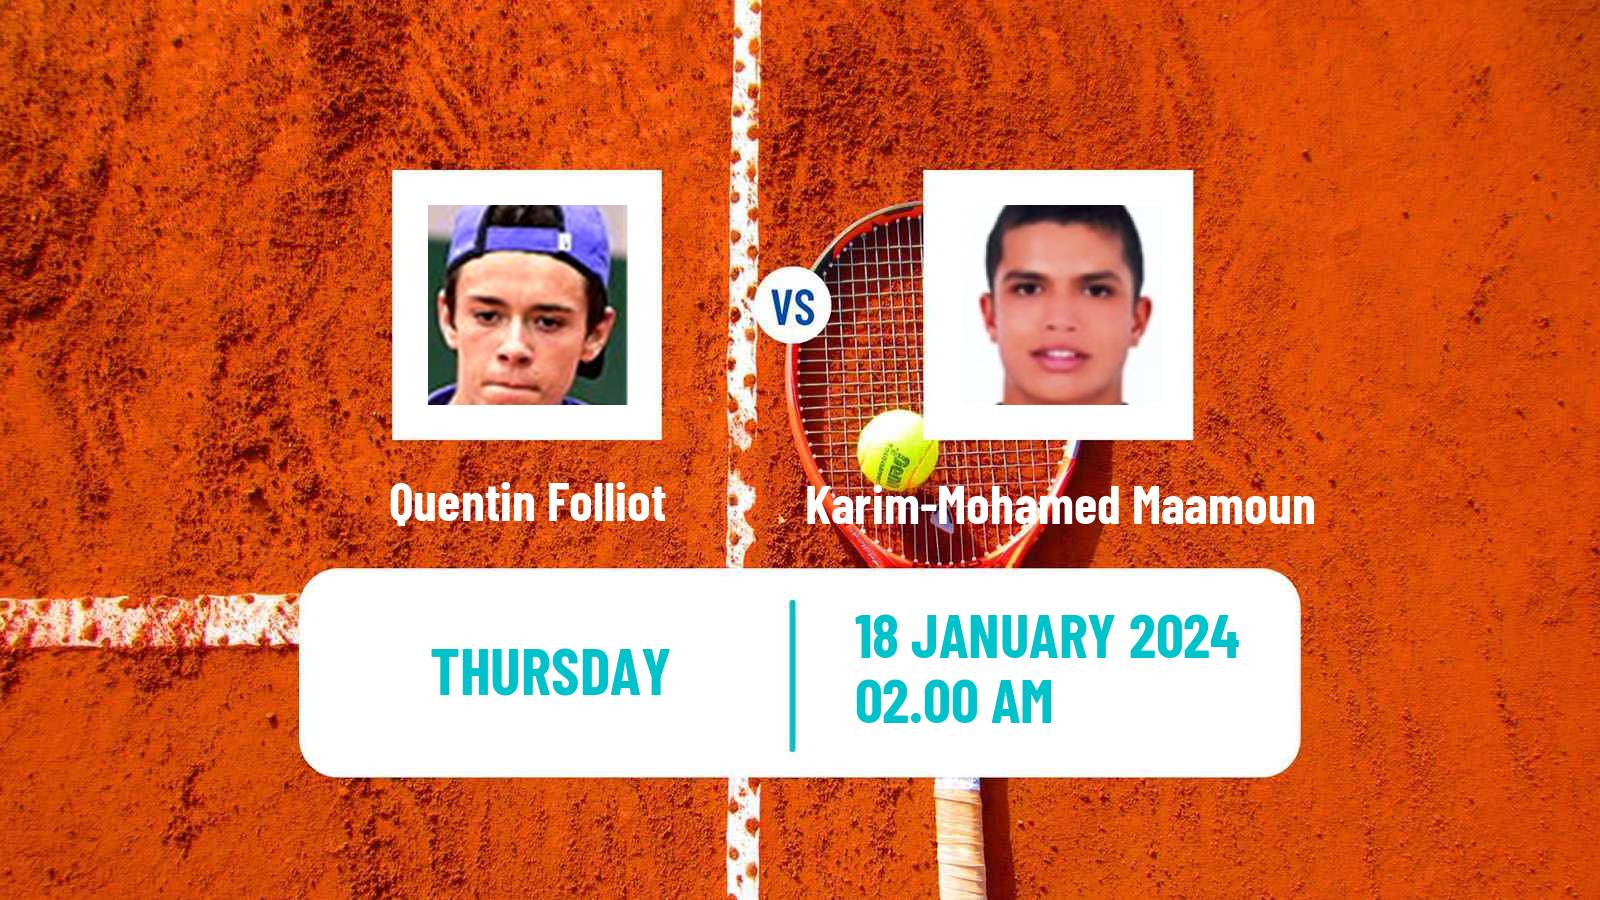 Tennis ITF M15 Antalya 2 Men Quentin Folliot - Karim-Mohamed Maamoun